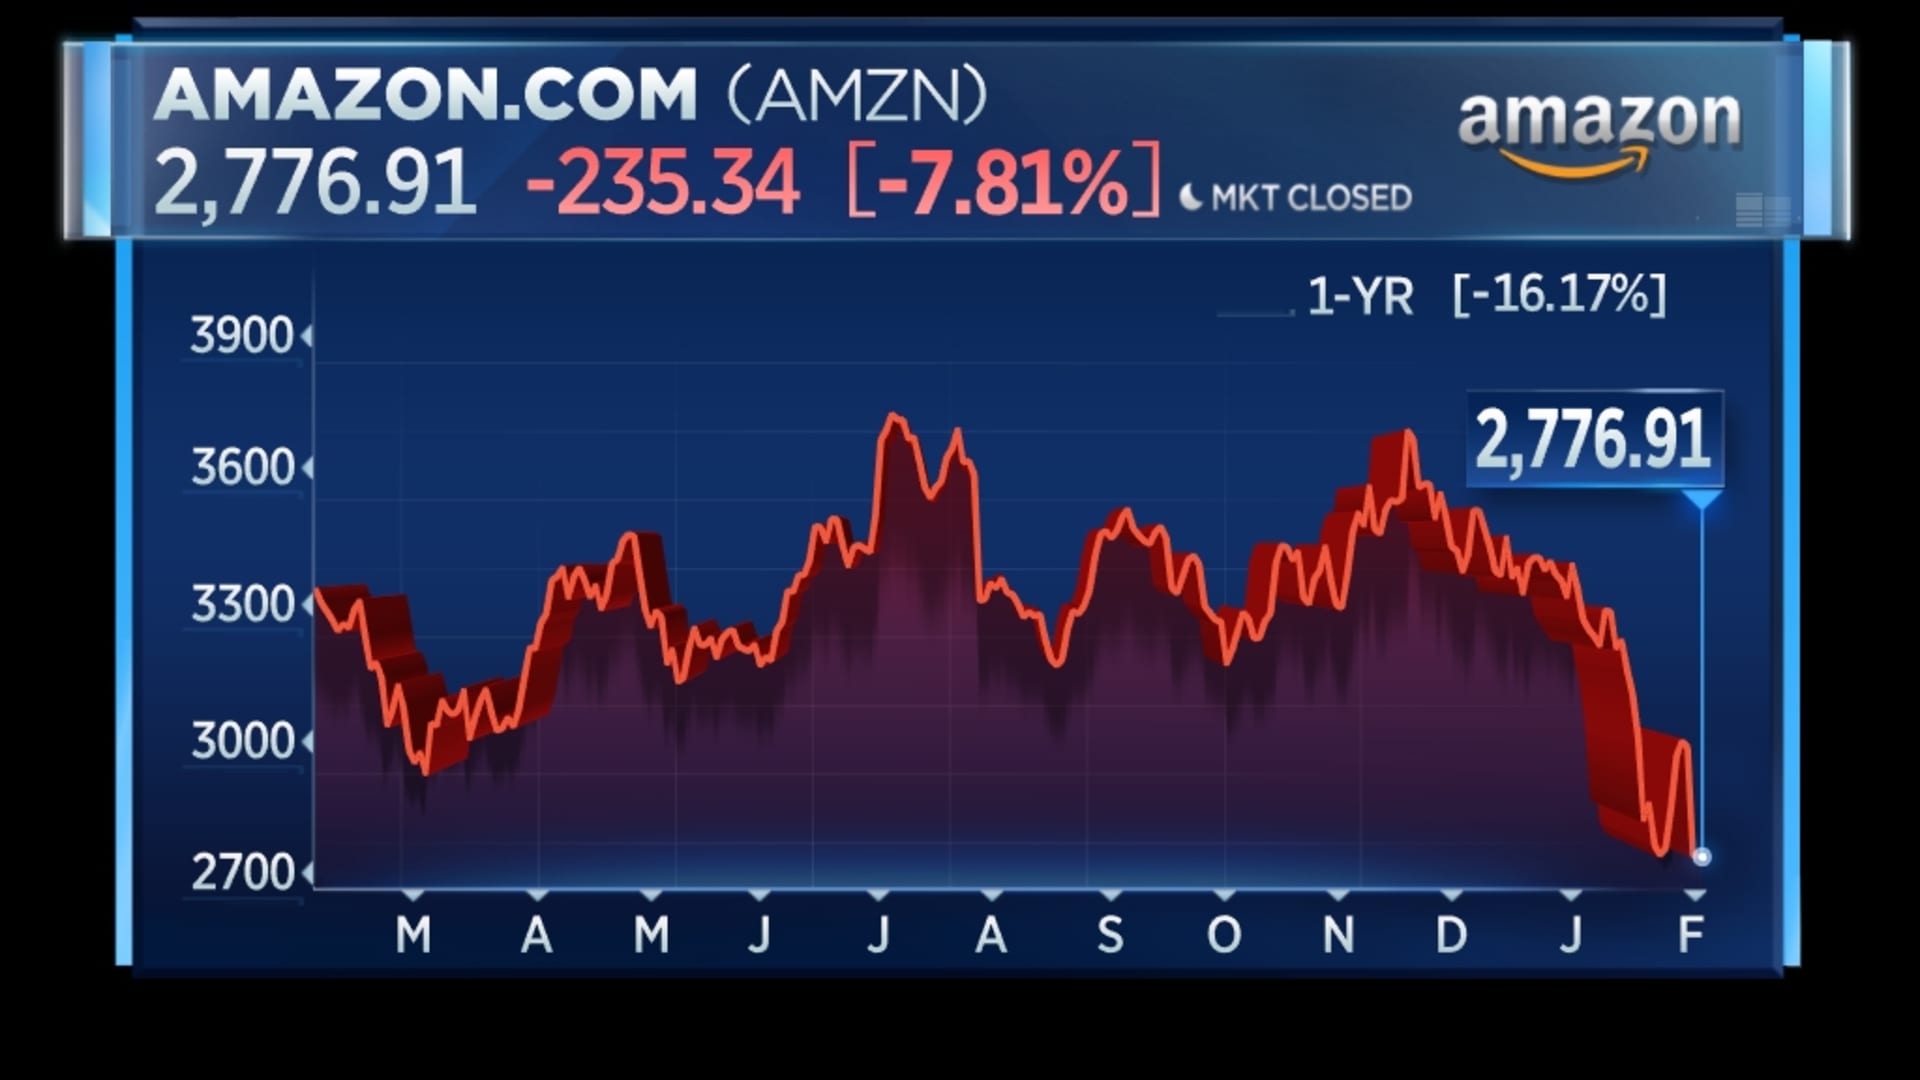 Amazon 12-month chart through Thursday's close